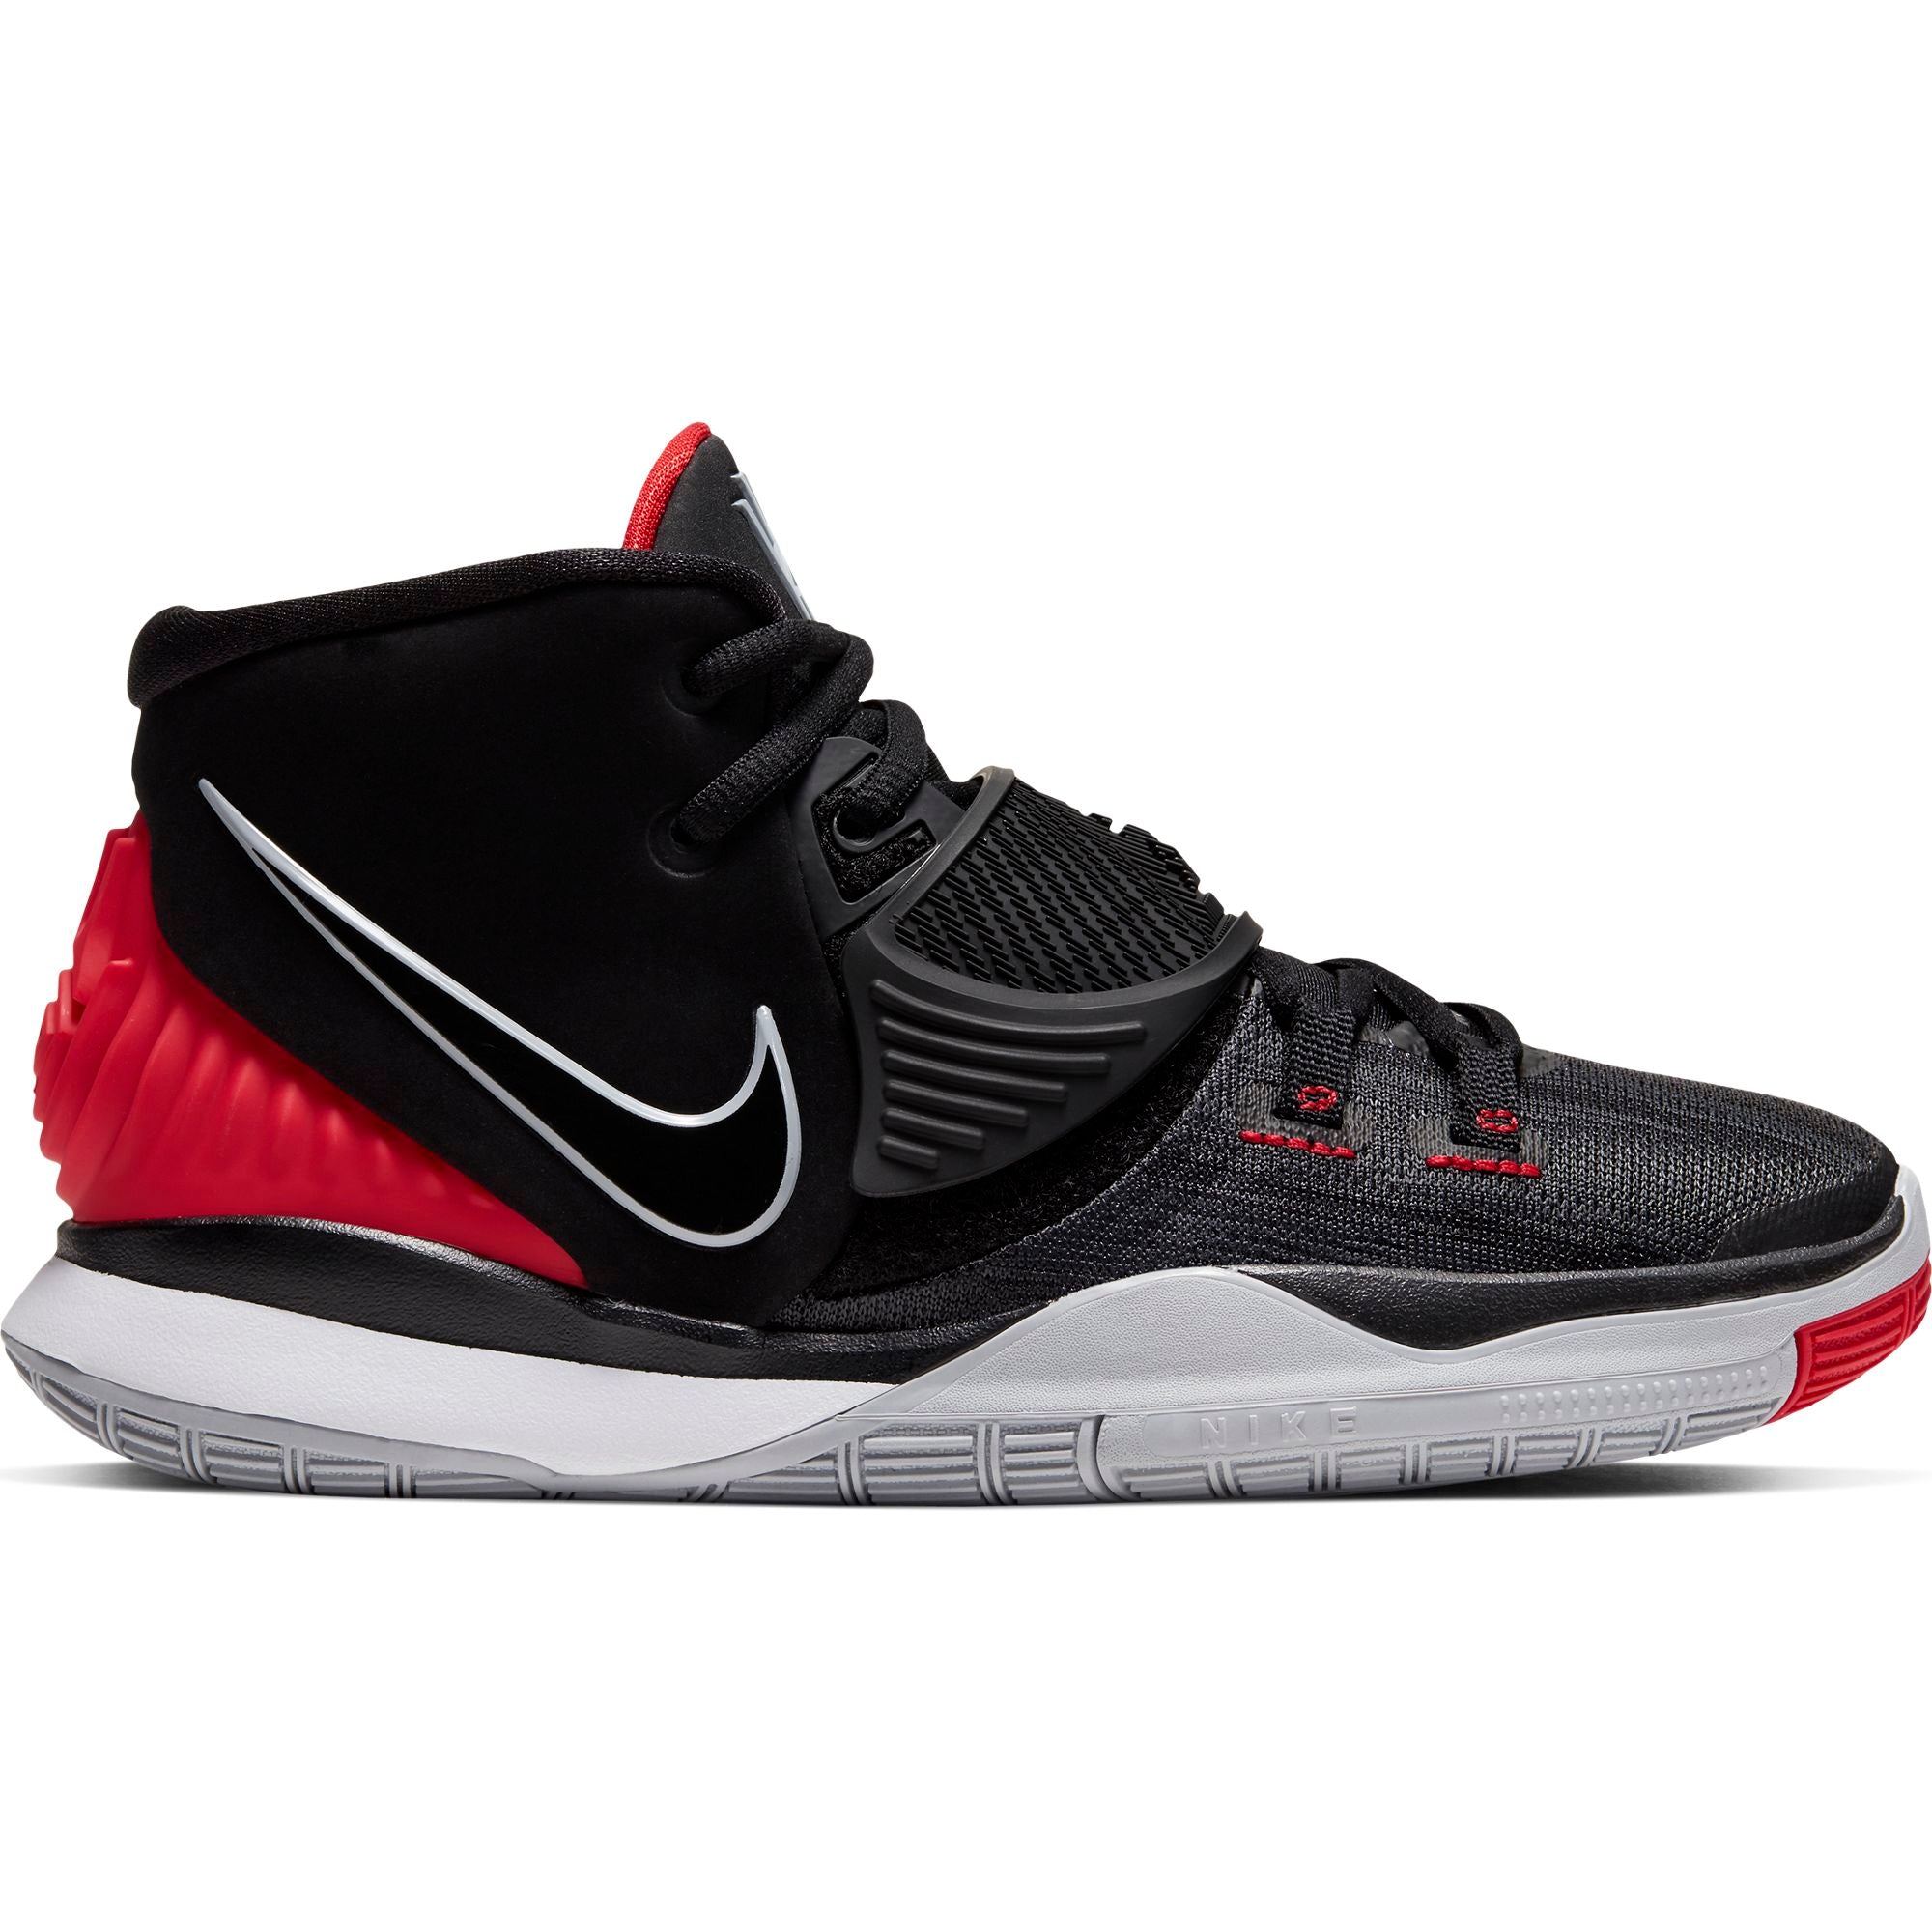 Nike Kids Kyrie 6 Basketball Boot/Shoe - Black/University Red/White